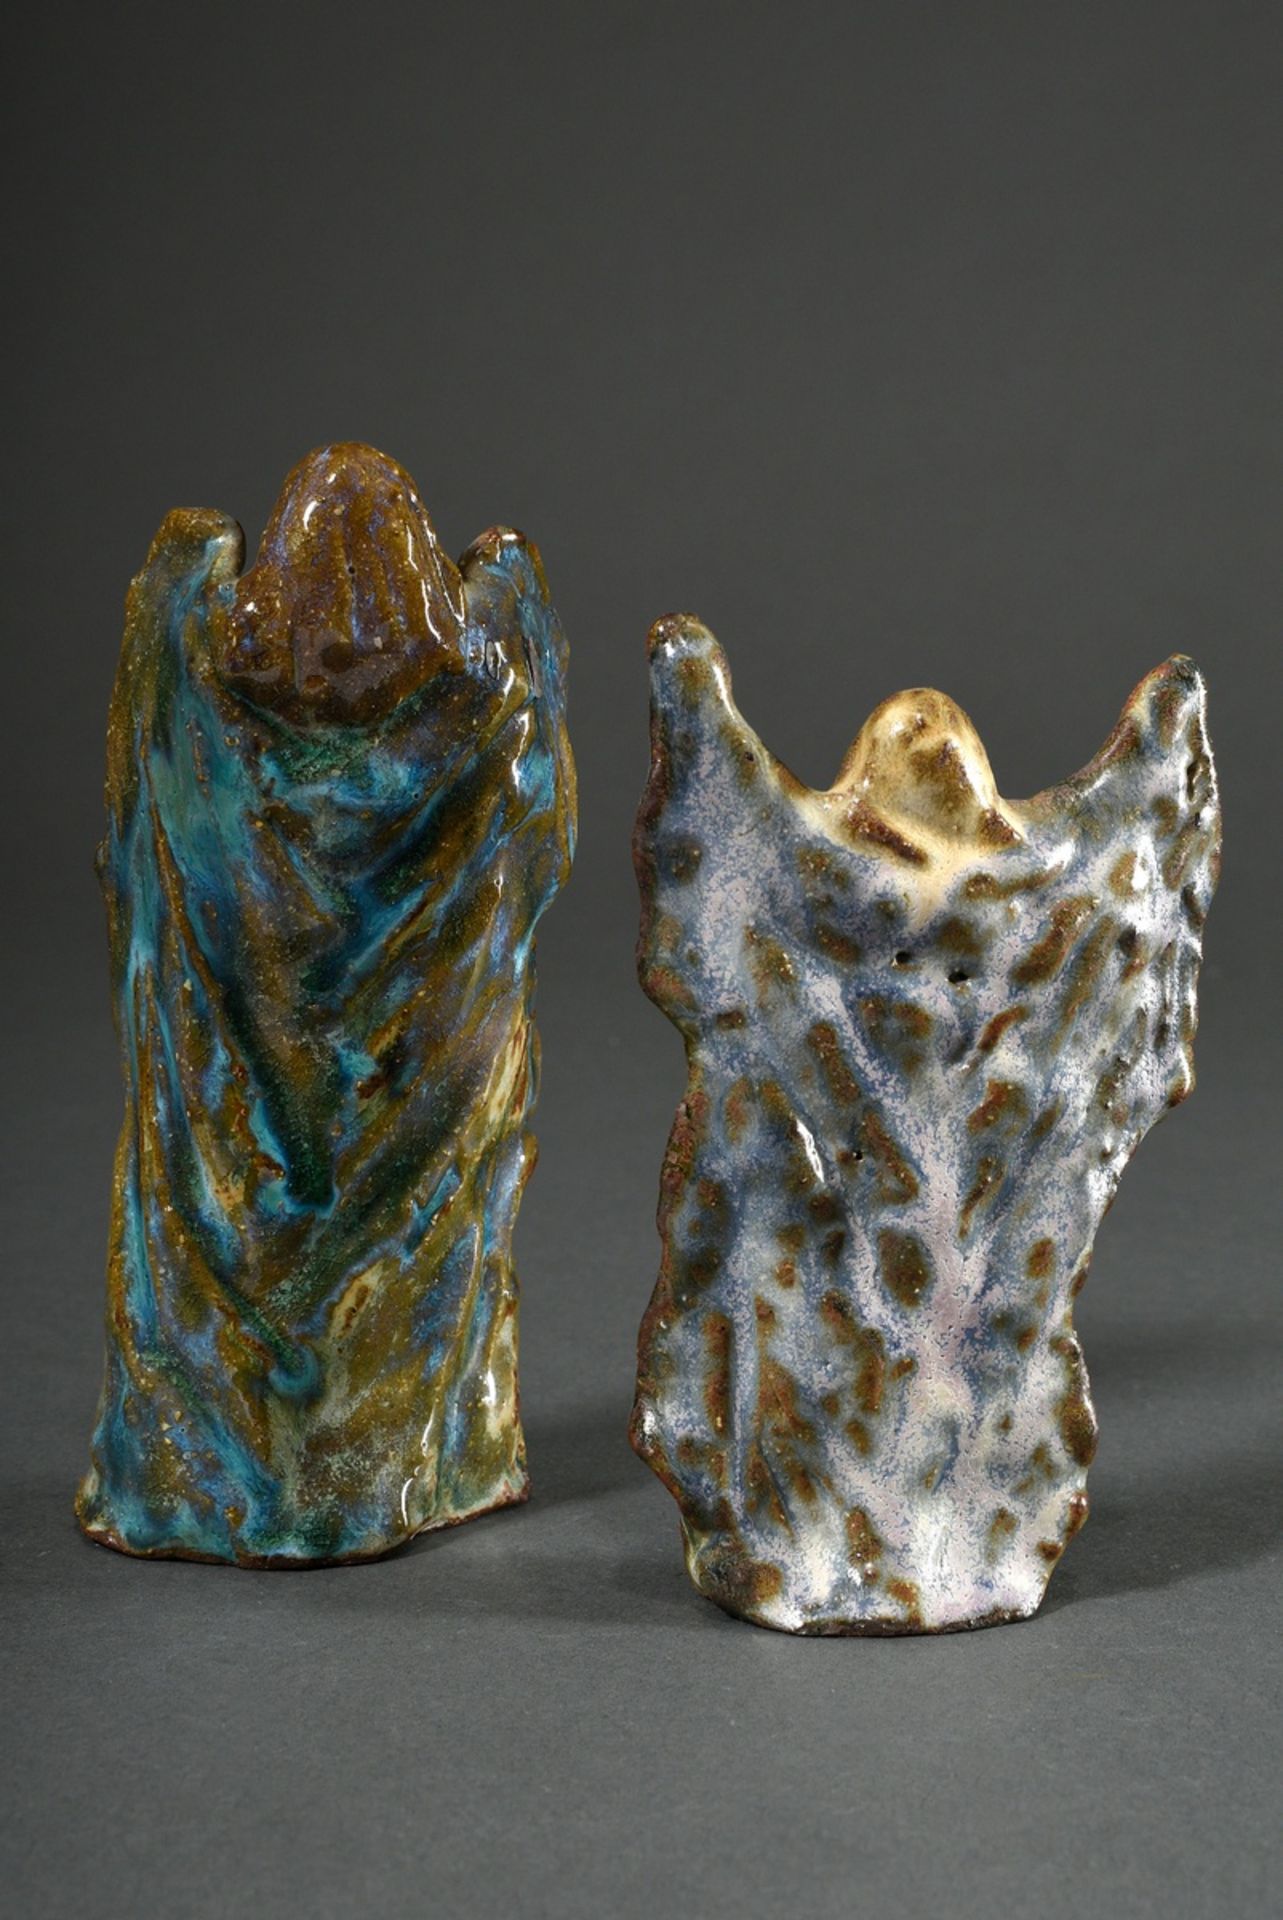 3 Various Maetzel, Monika (1917-2010) figures "Female nude with cloth", ceramic light glazed, 2x in - Image 3 of 7